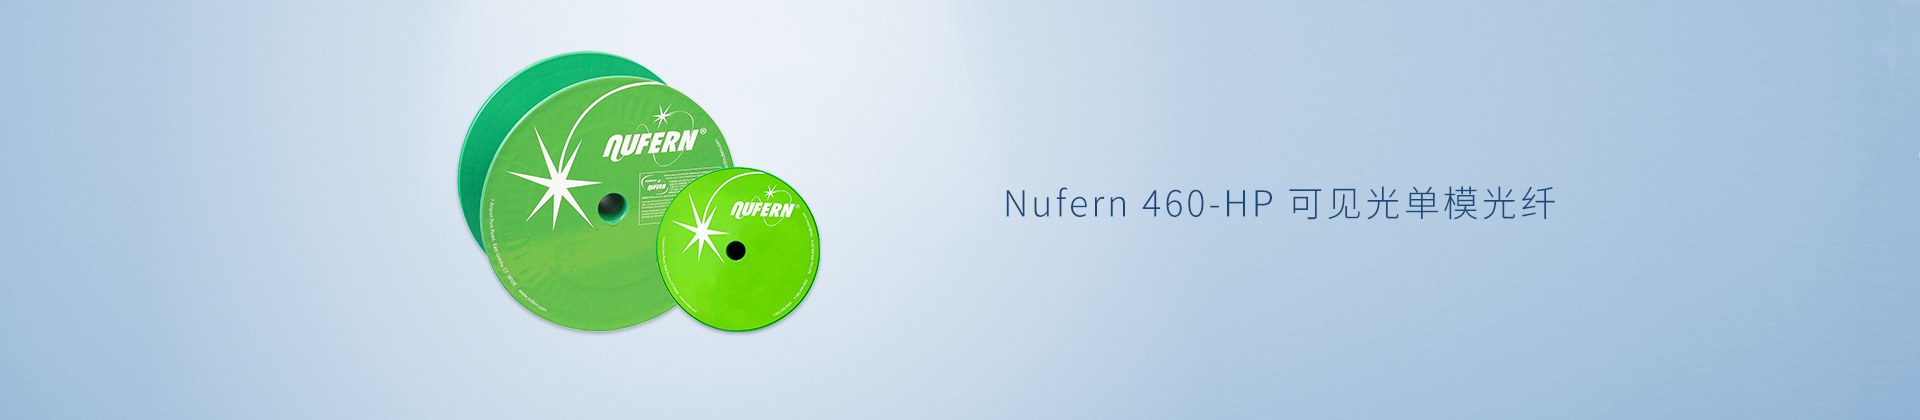 Nufern 460-HP 可见光单模光纤